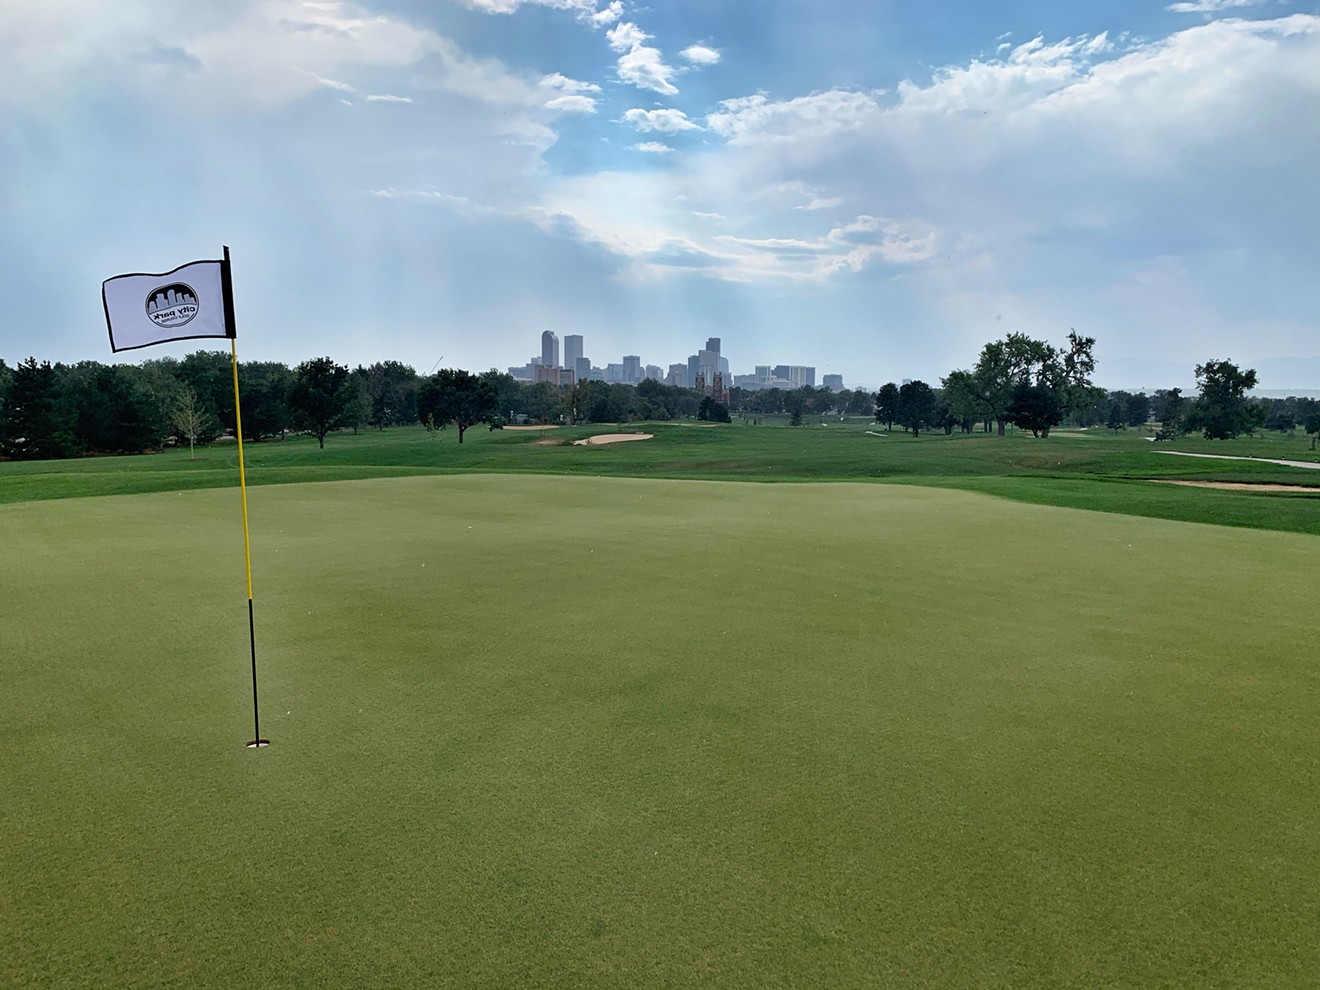 City Park Golf Course awaits you.